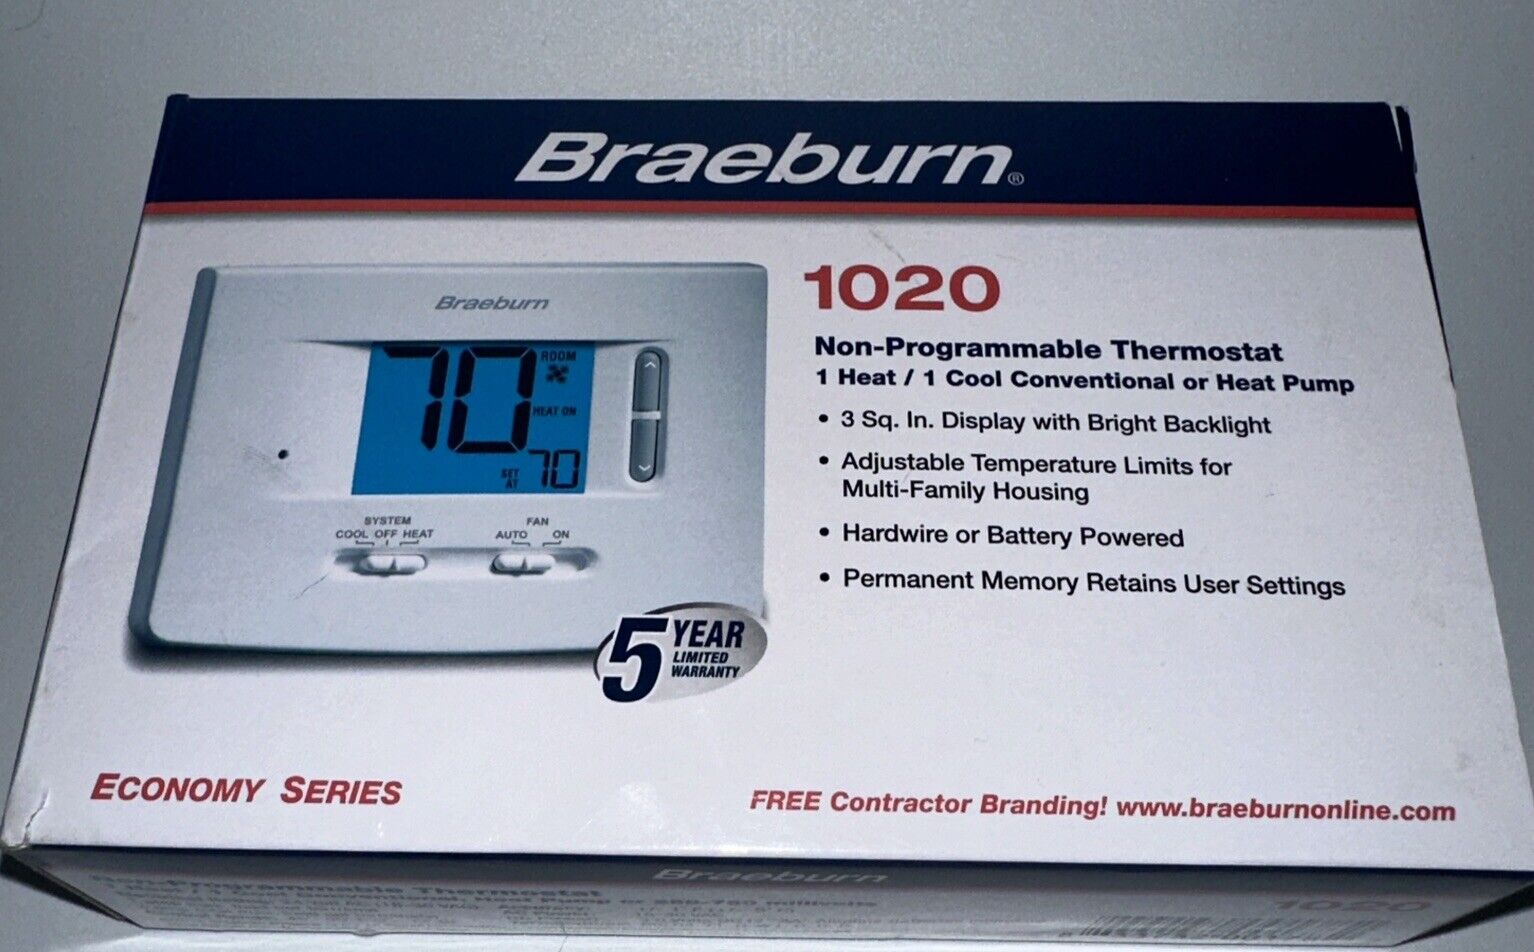 Braeburn 1020 Economy Thermostat - Non-Programmable Heat Pump 1 Heat / 1 Cool/B2